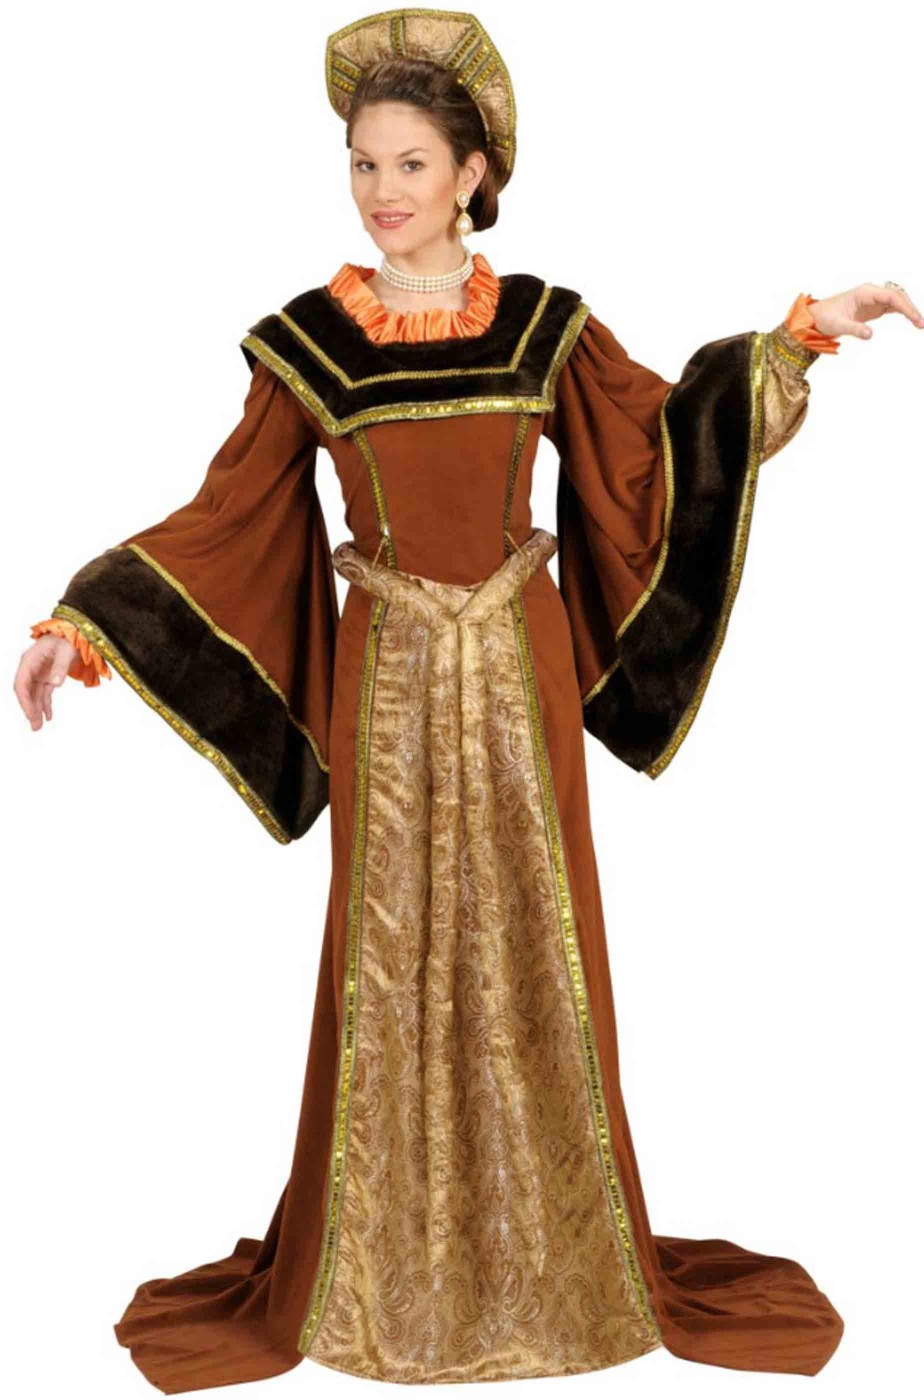 Costume donna dama Tudor rinascimentale adulta